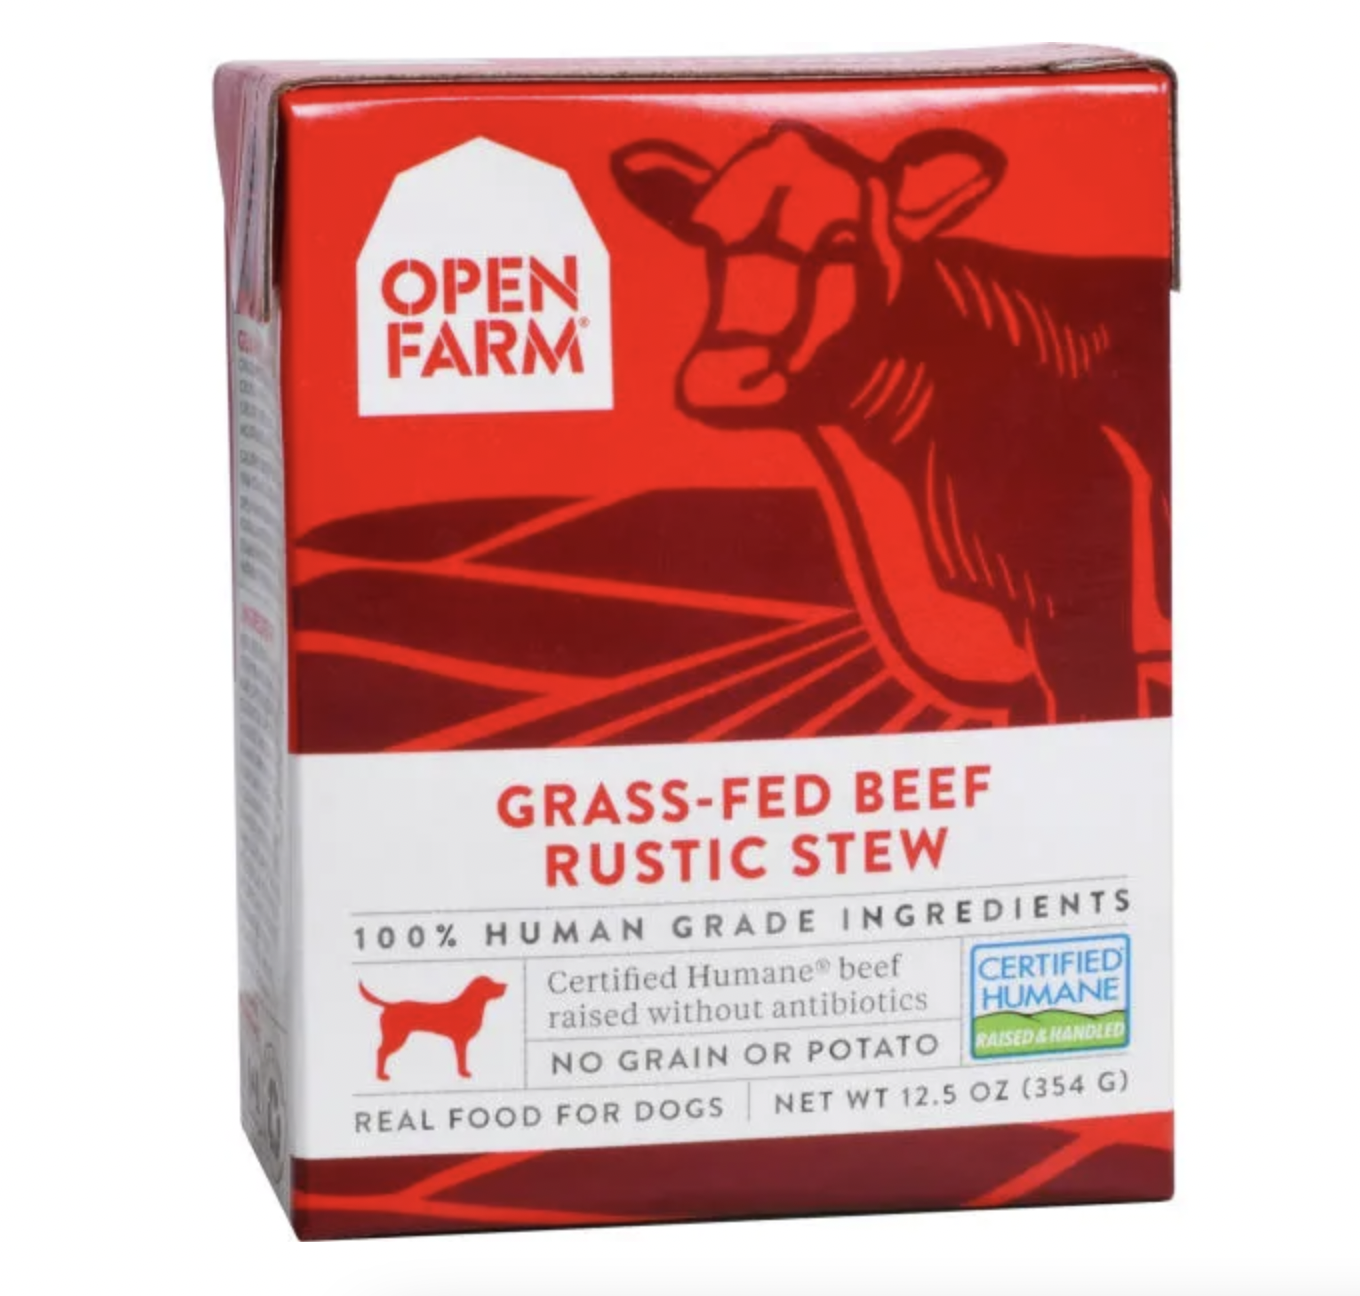 Grass-Fed Beef Rustic Stew - Open Farm